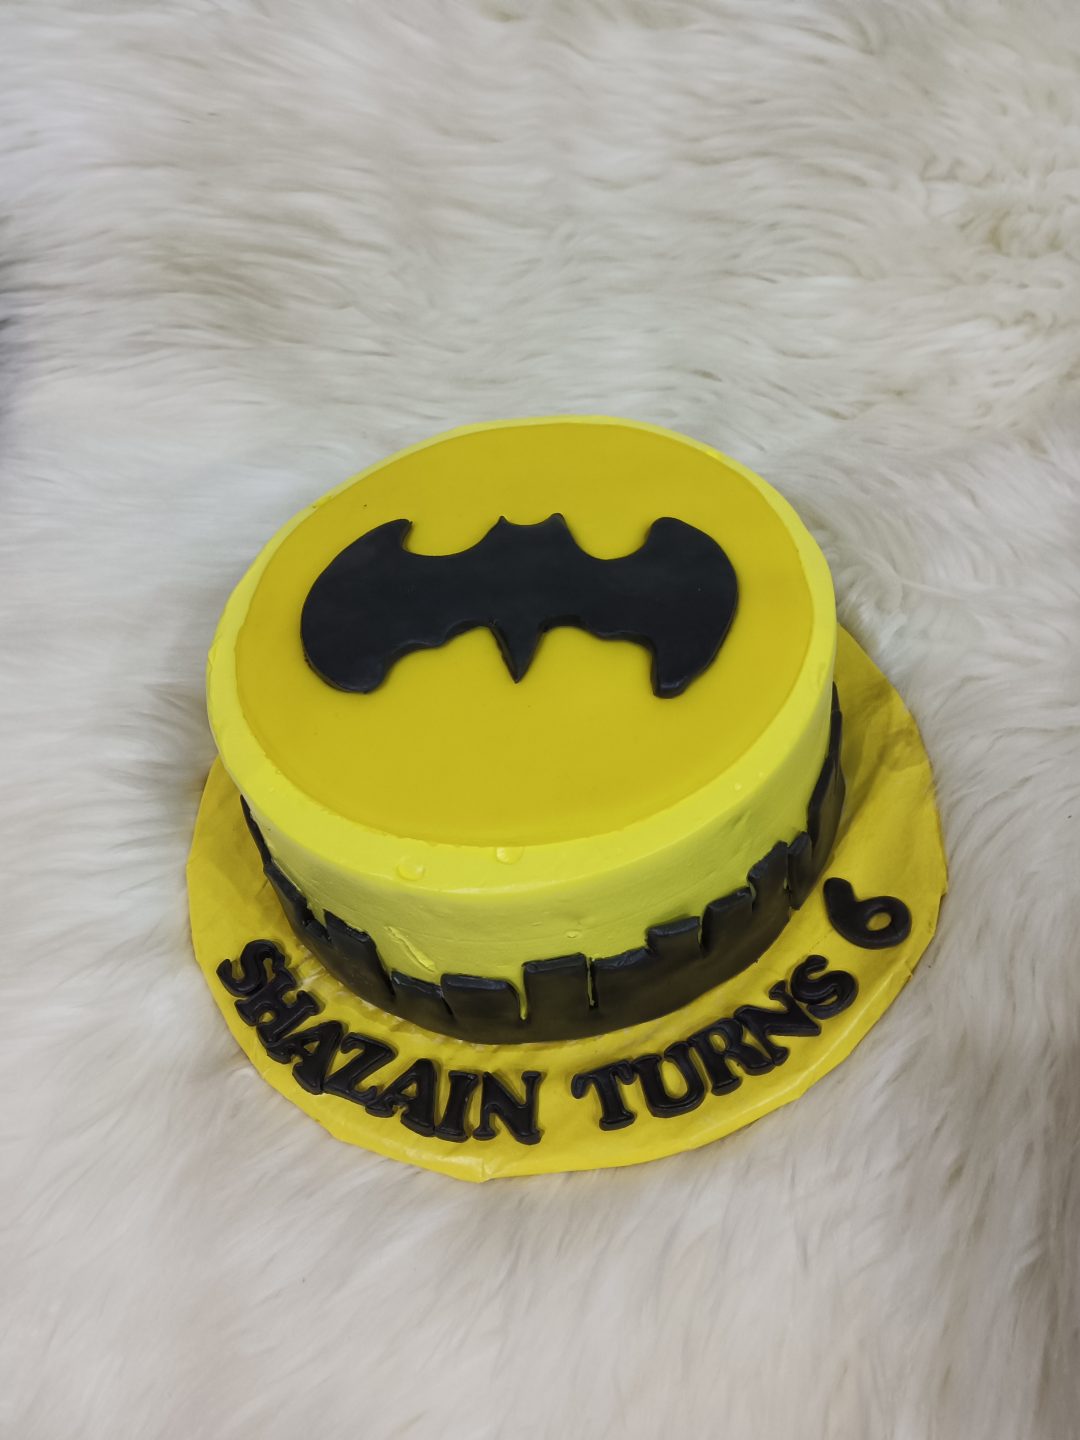 Batman theme cream with fondant cake